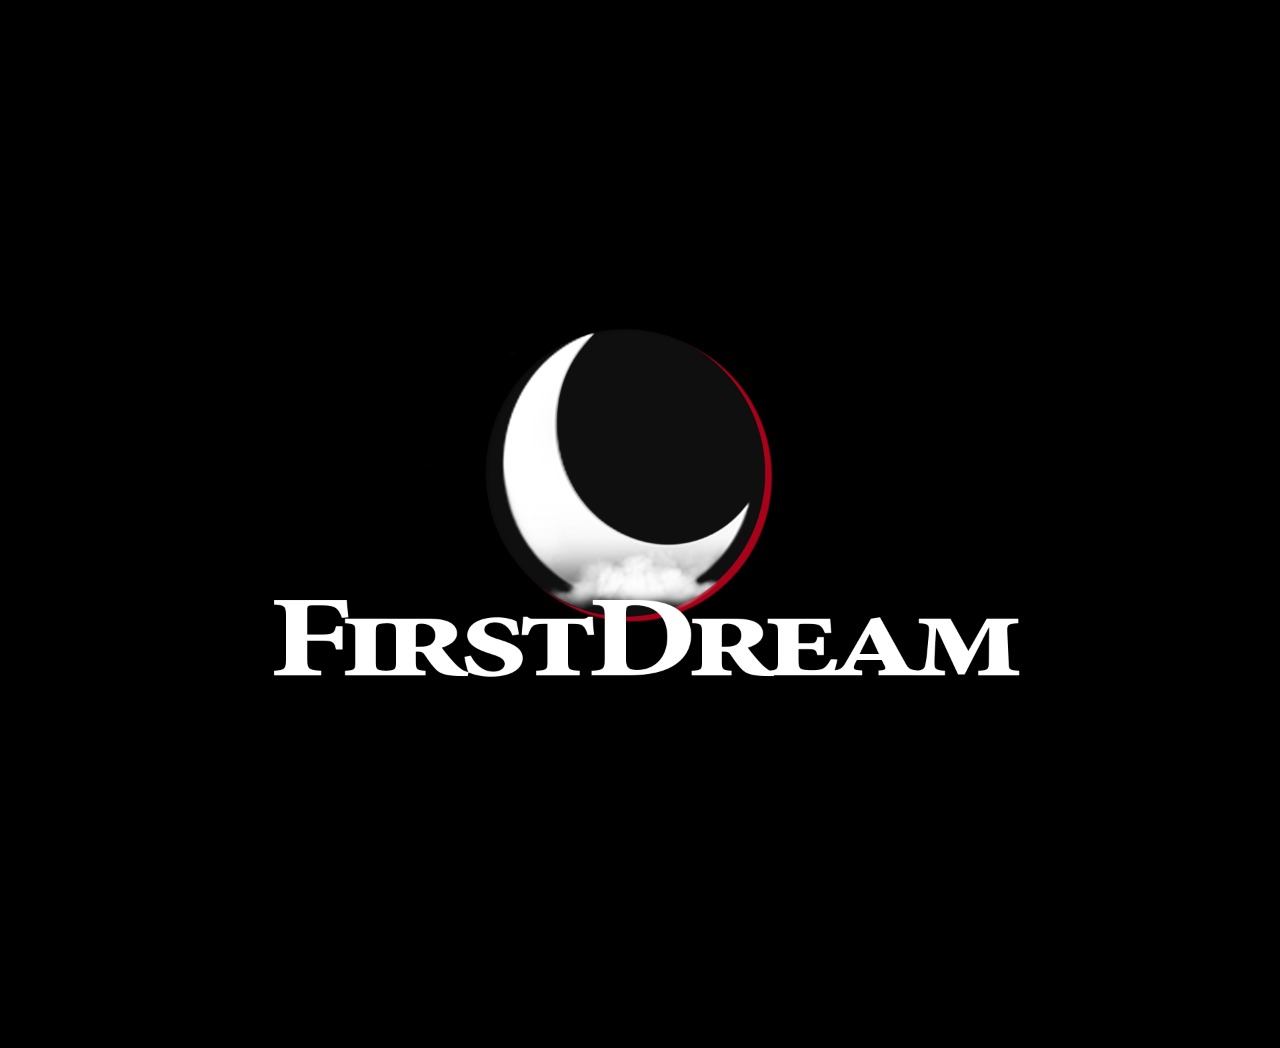 First Dream logo